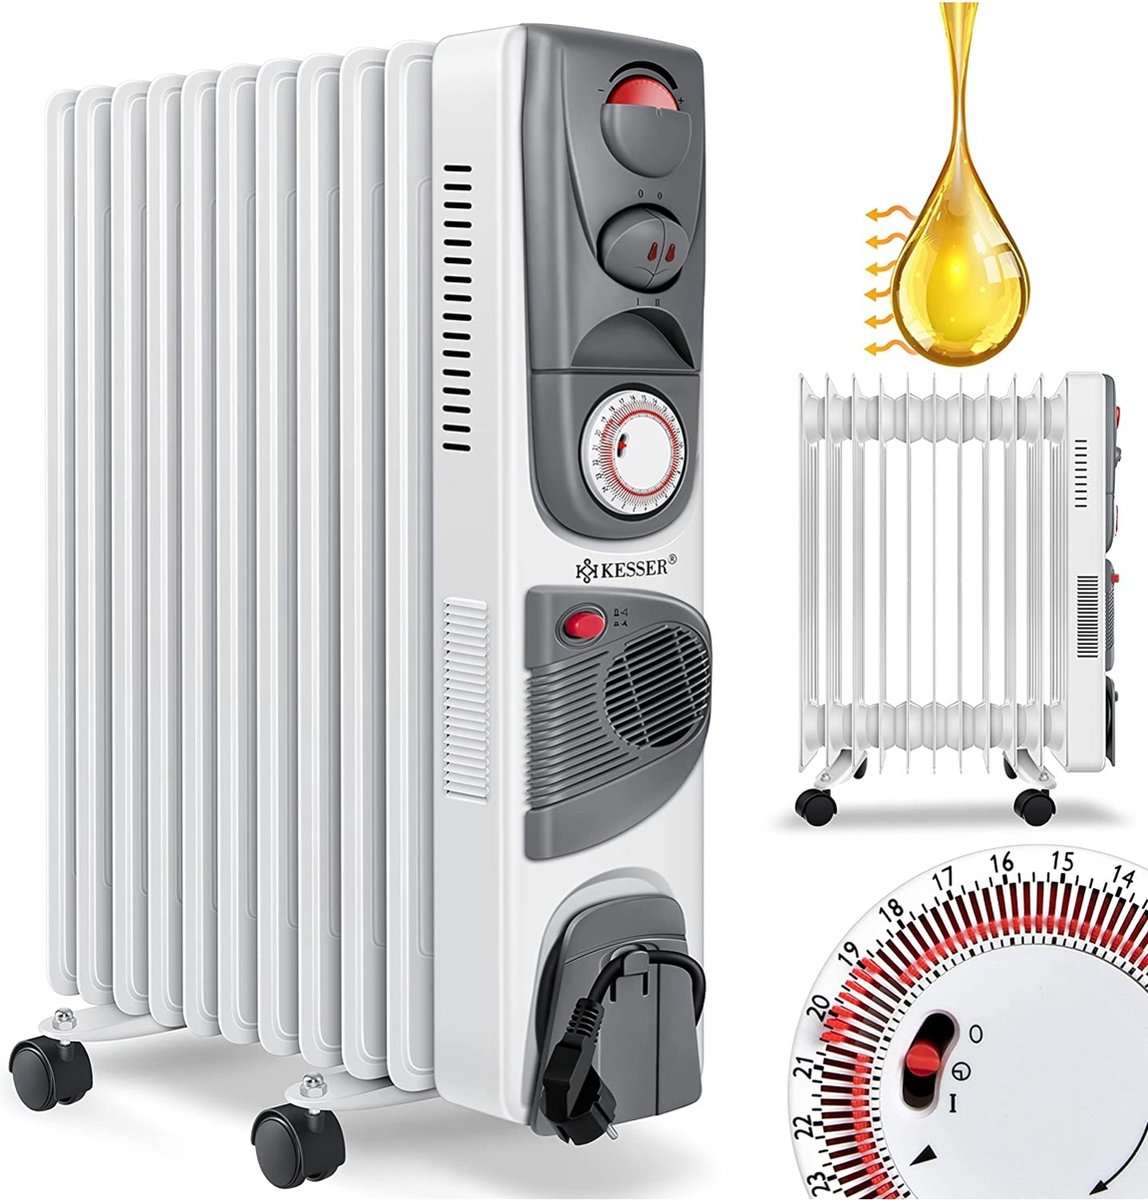 COAZY Olieradiator Elektrisch 2500W - Oliegevulde Radiator - Elektrische Kachel - Kachels - Thermostaat - Timer - 3 Standen - tot 2500W - WIT